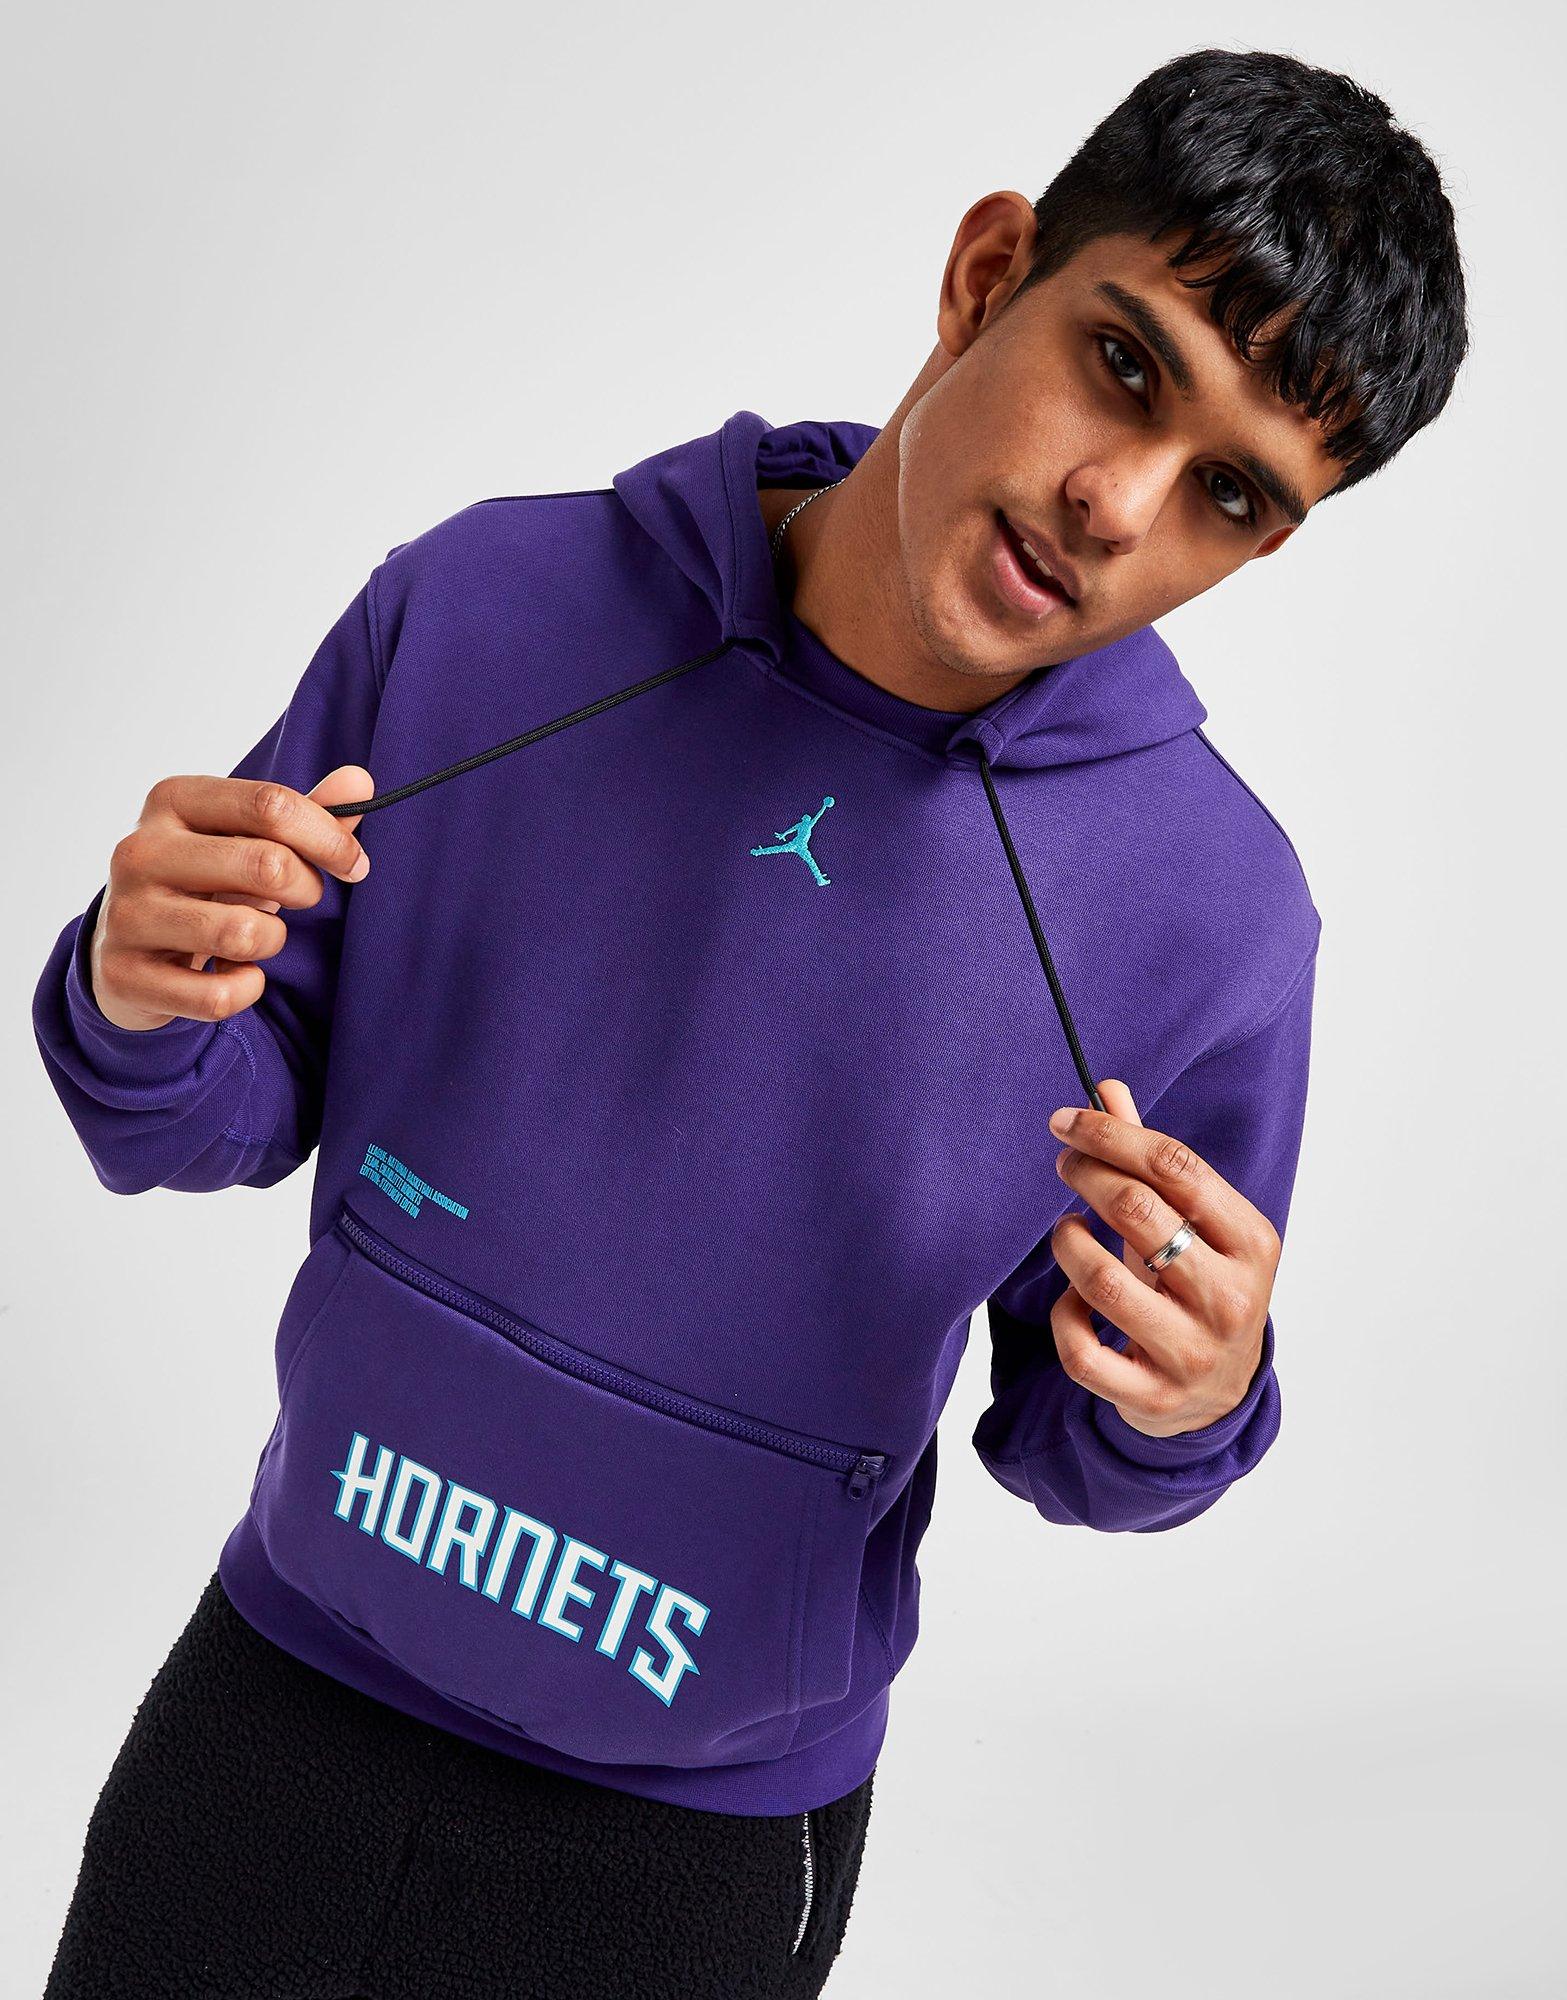 Charlotte Hornets Hugo Jumpman Jordan Brand Team Store Exclusive Tshirt